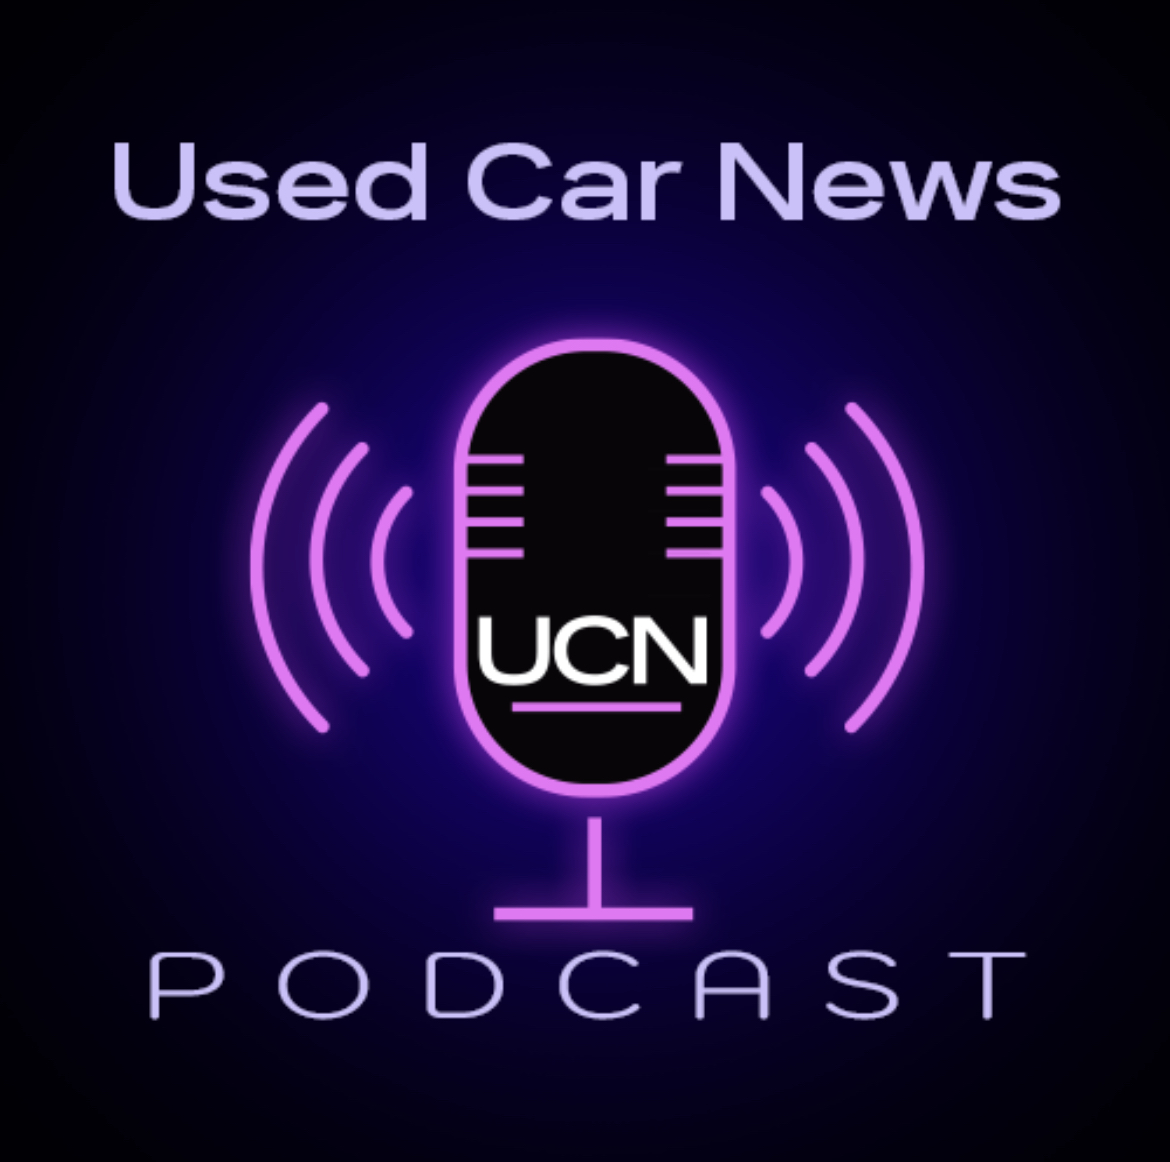 Used Car News Interview with Kanchana Sundaram from Experian